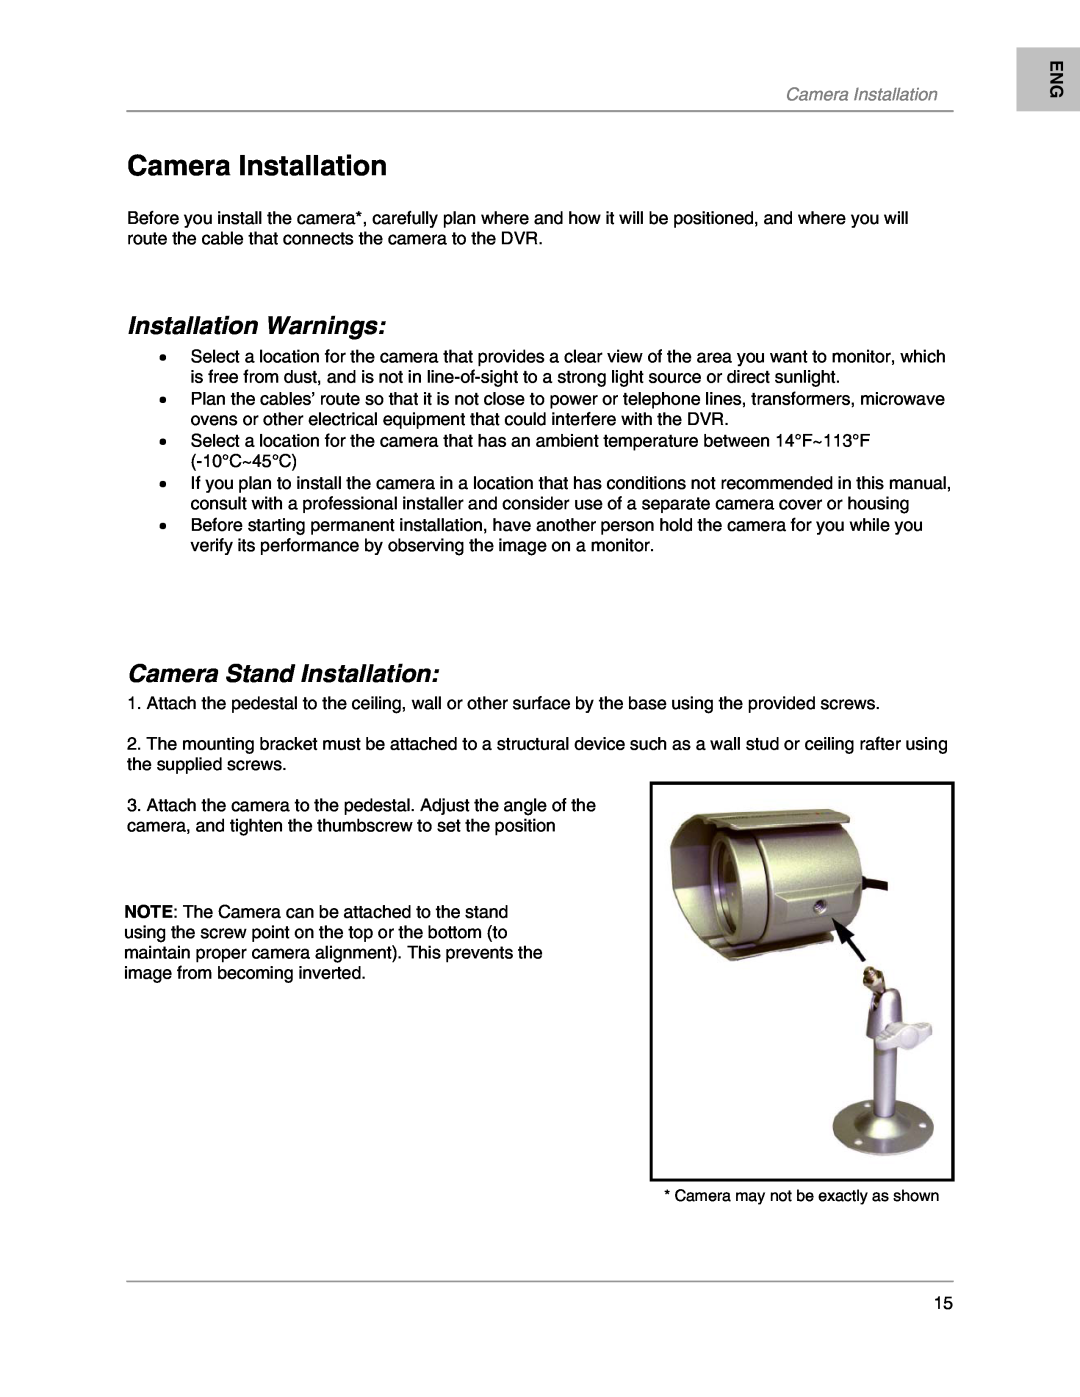 LOREX Technology L204, L208 instruction manual Camera Installation, Installation Warnings, Camera Stand Installation 